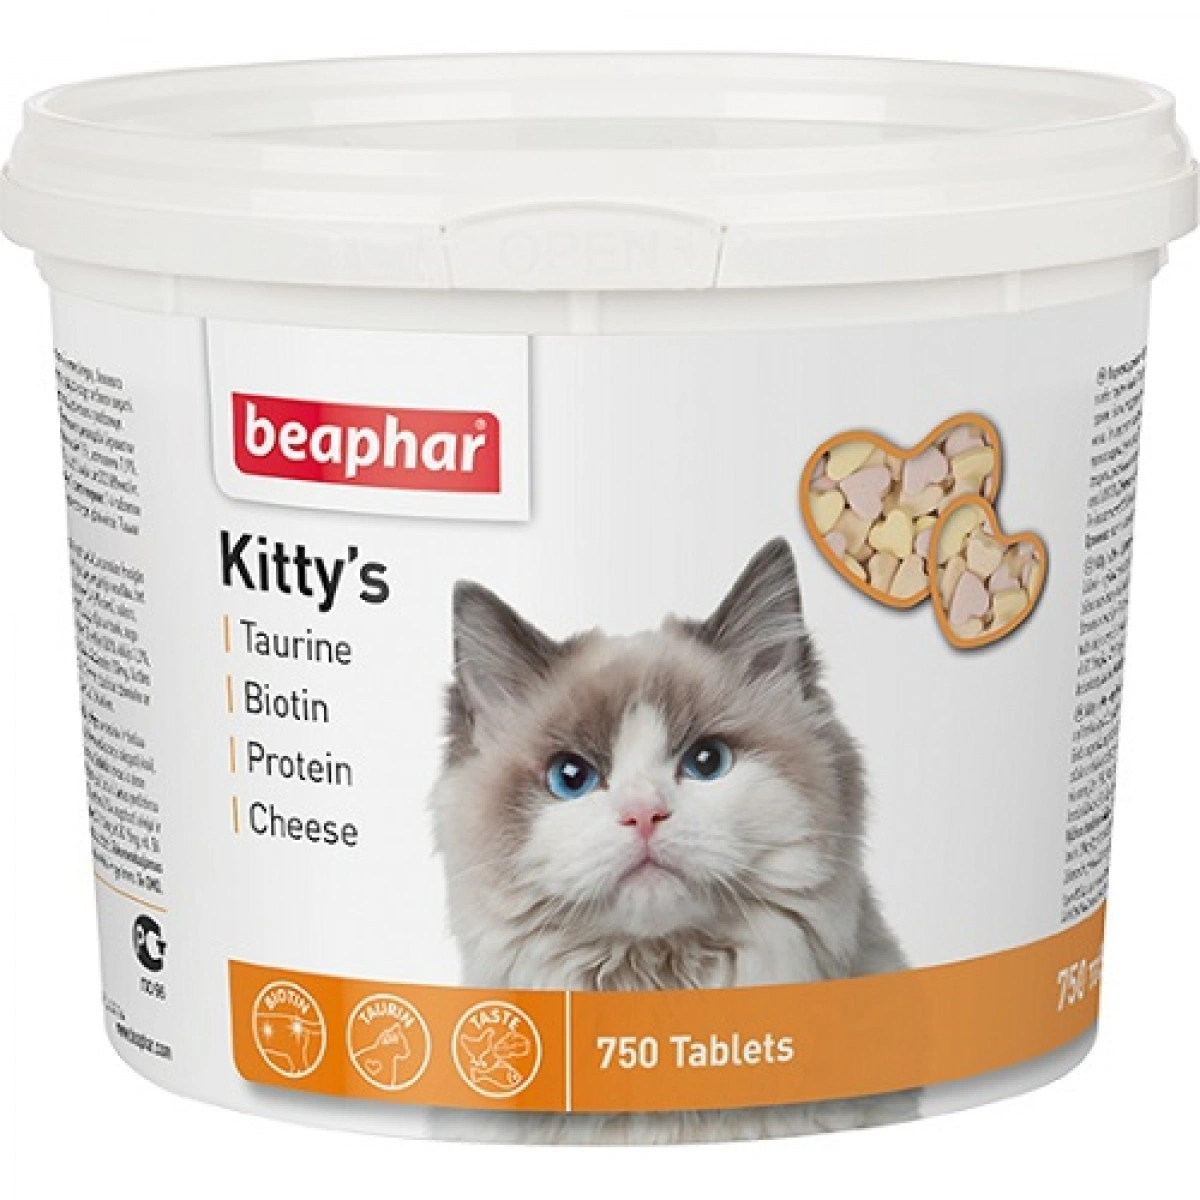 Кормовая добавка Beaphar Kittys Mix + Taurine-Biotine /Protein/Cheese  витамины для кошек с таурином, биотином,